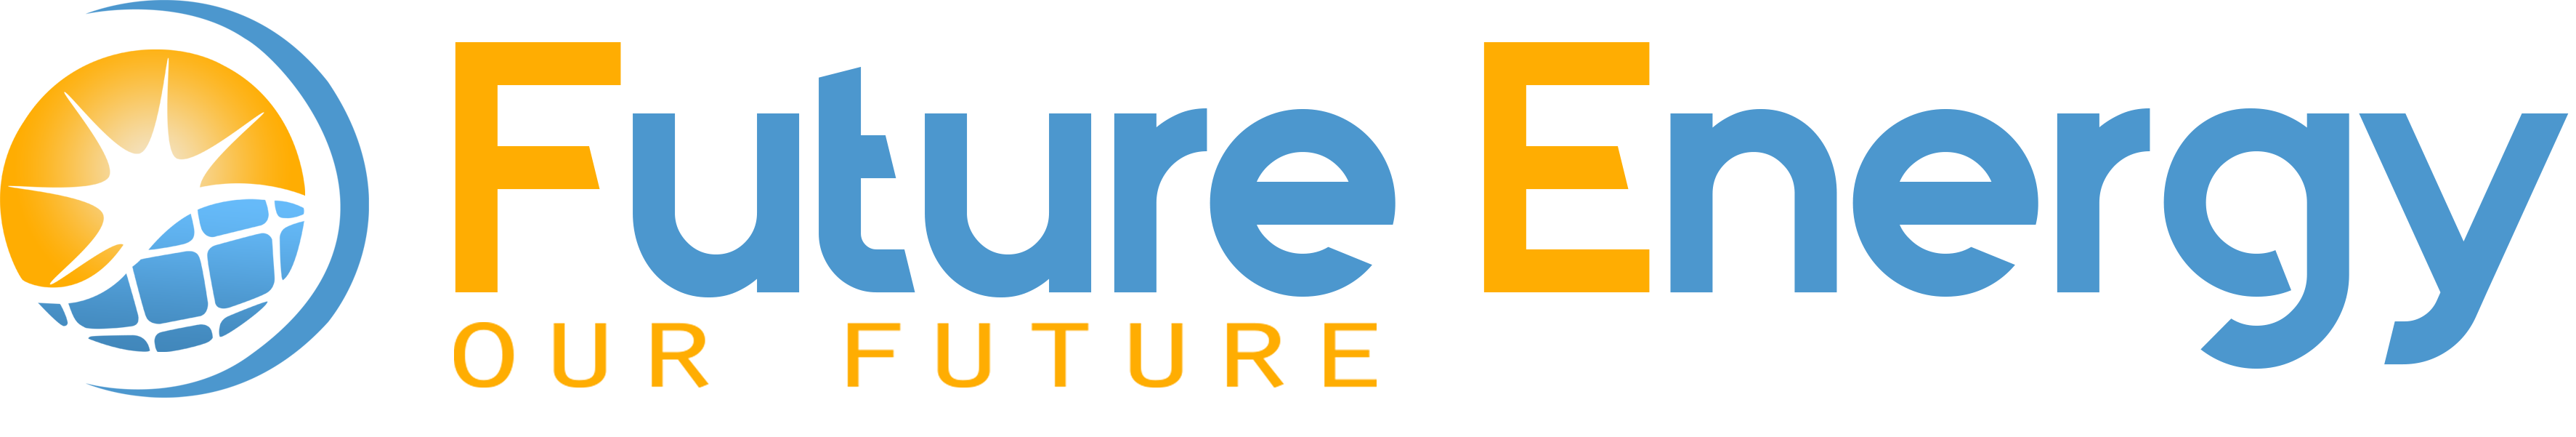 Future Energy logo